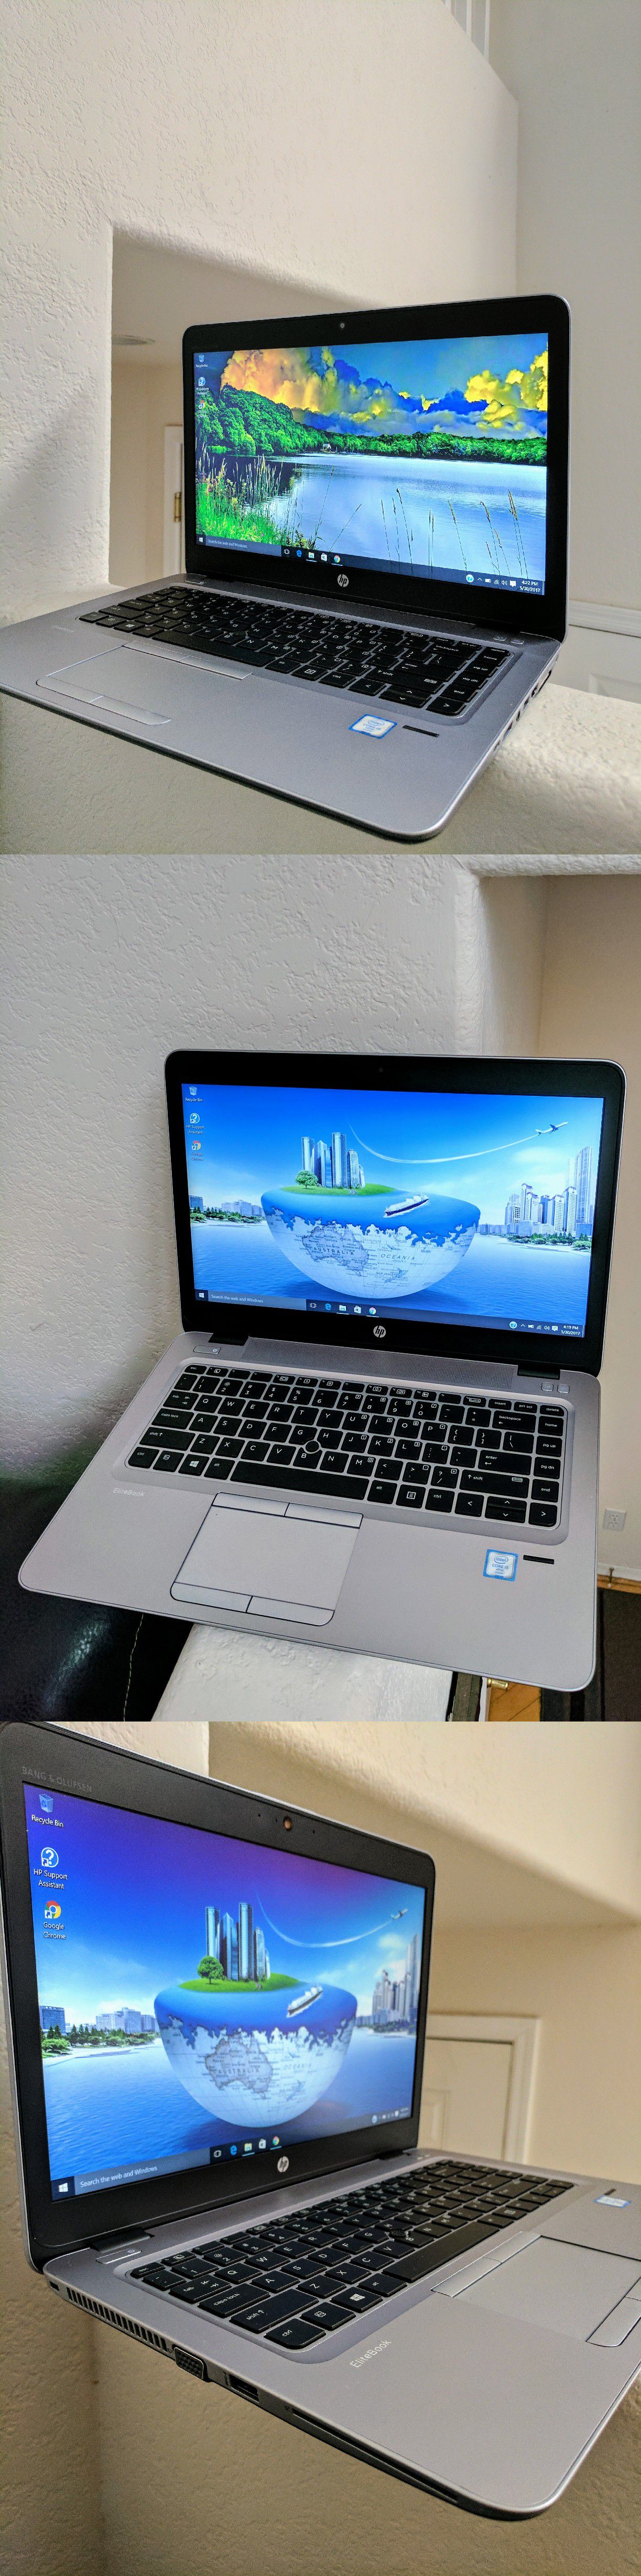 HP Elitebook 1040 G3 Ultrabook Laptop i7 SSD Windows 10 Pro Photoshop